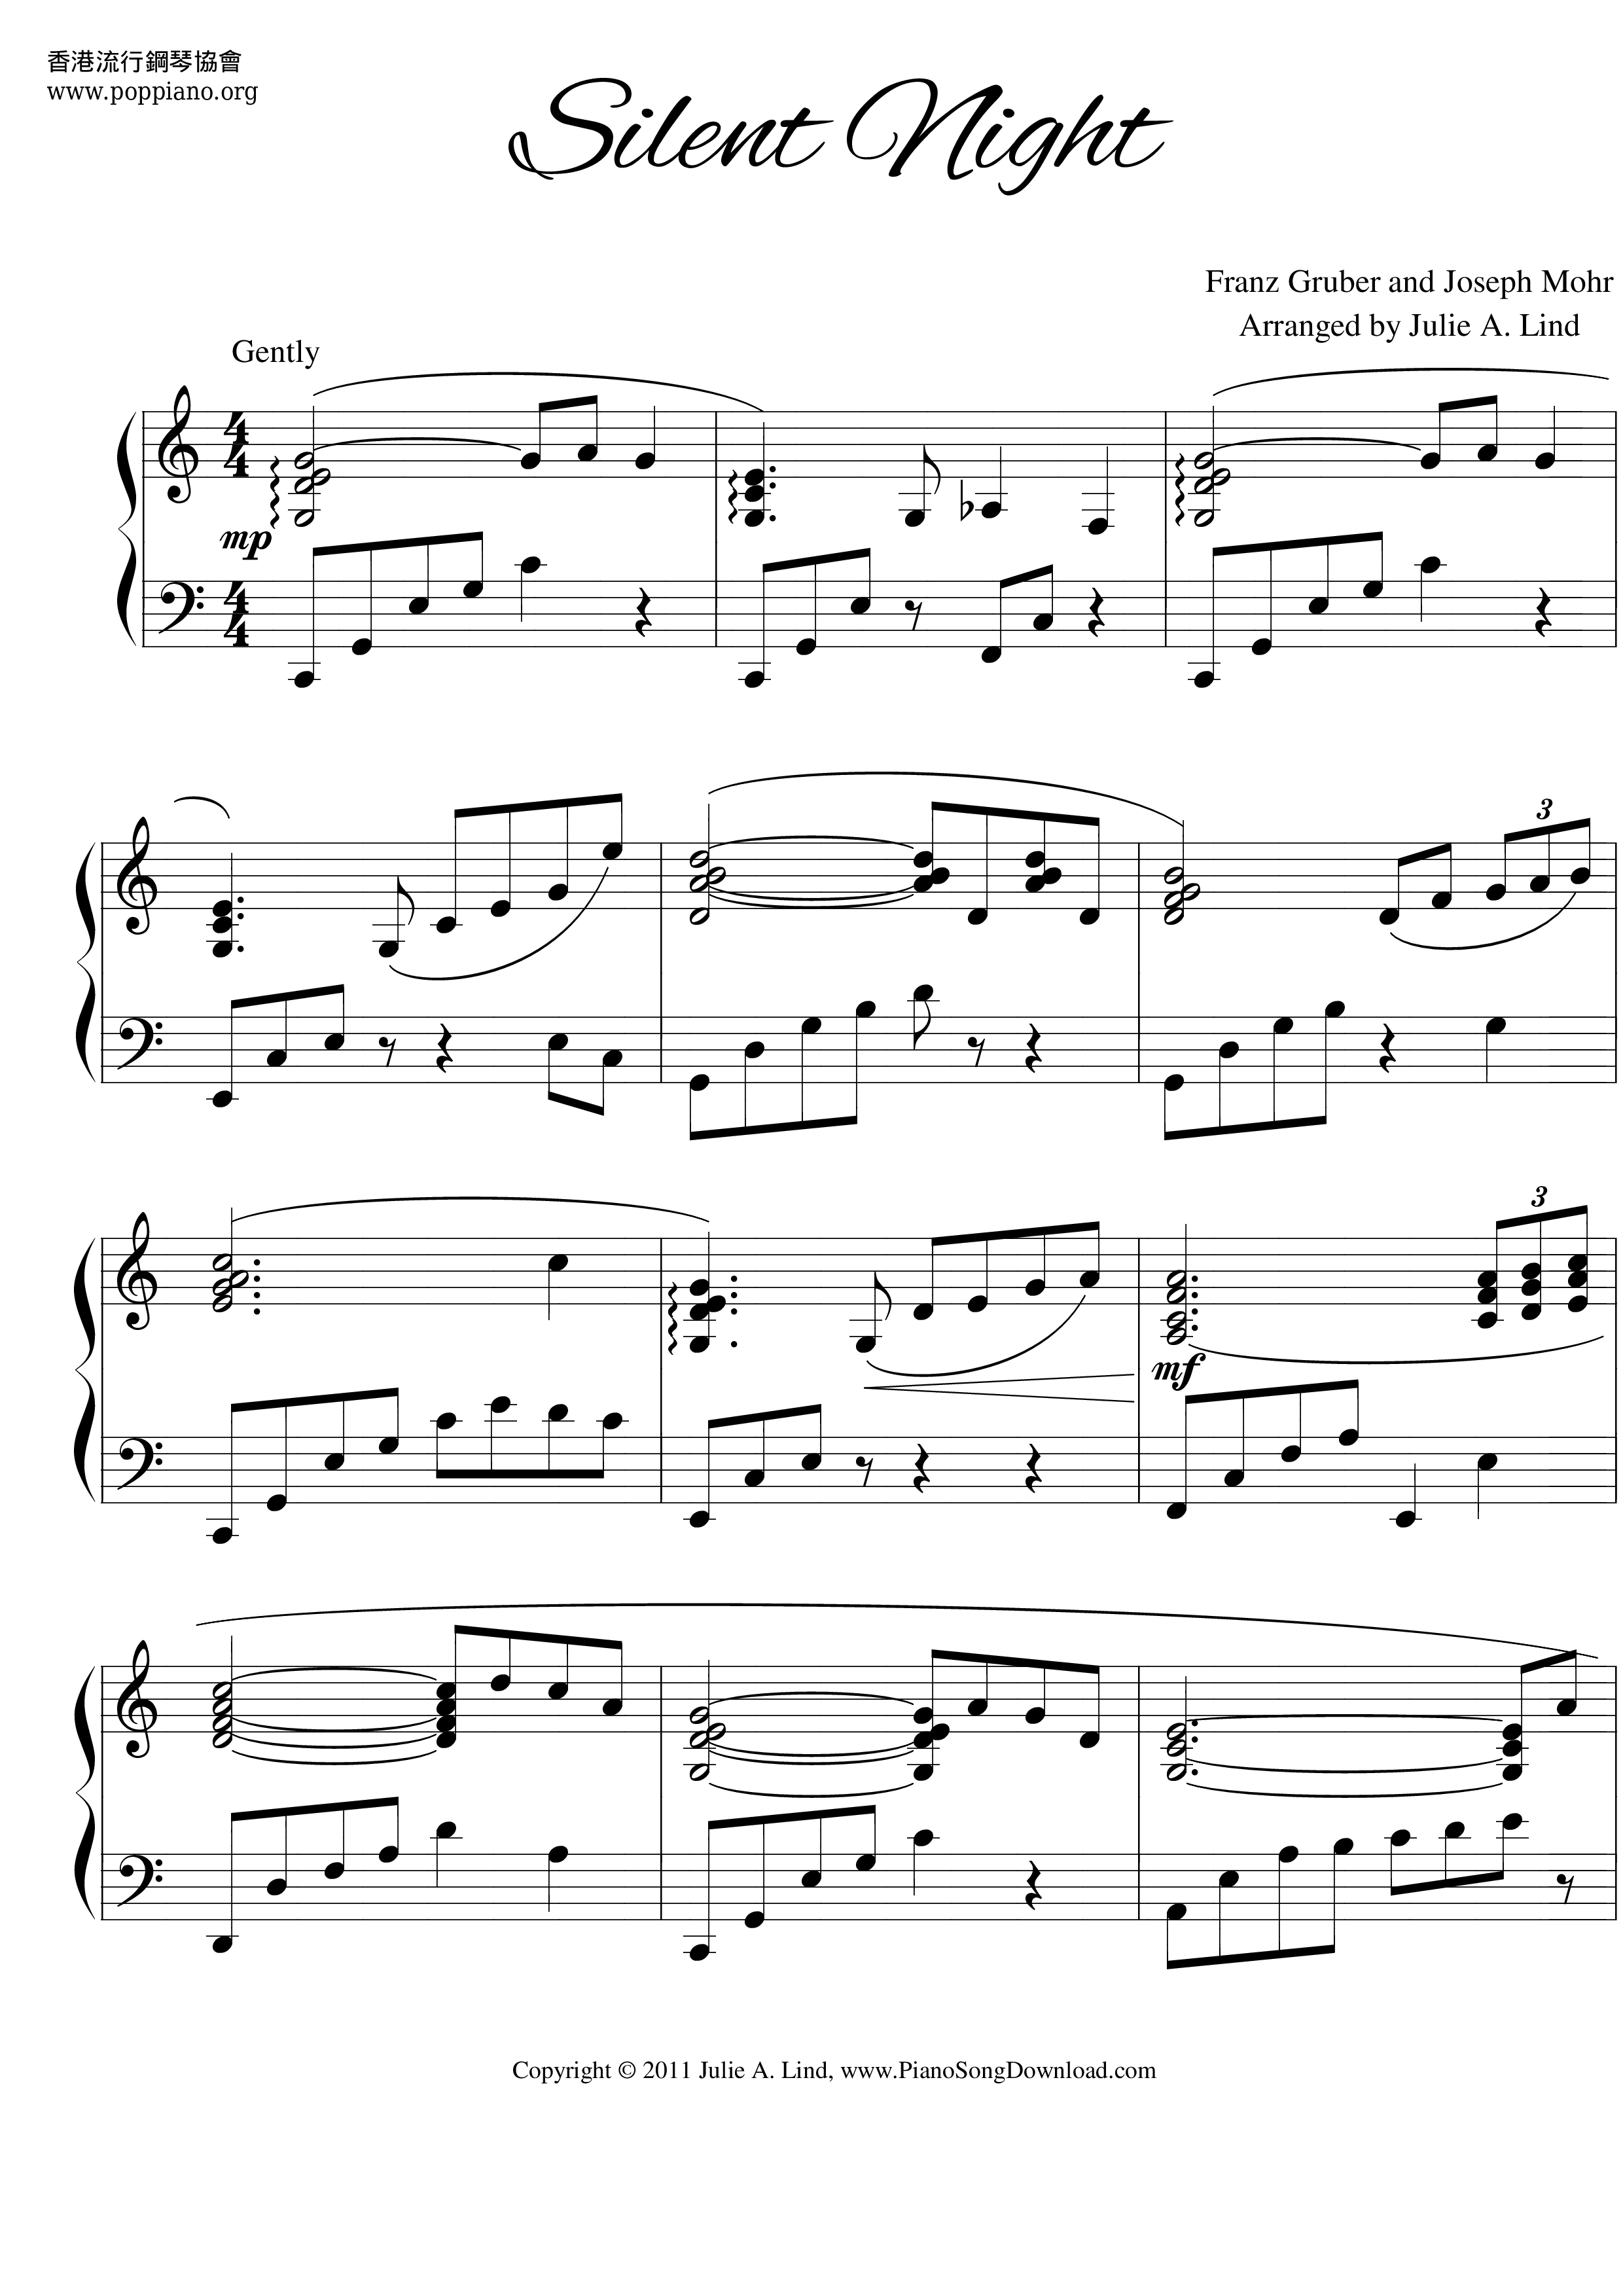 Silent Night (Christmas Eve) Score